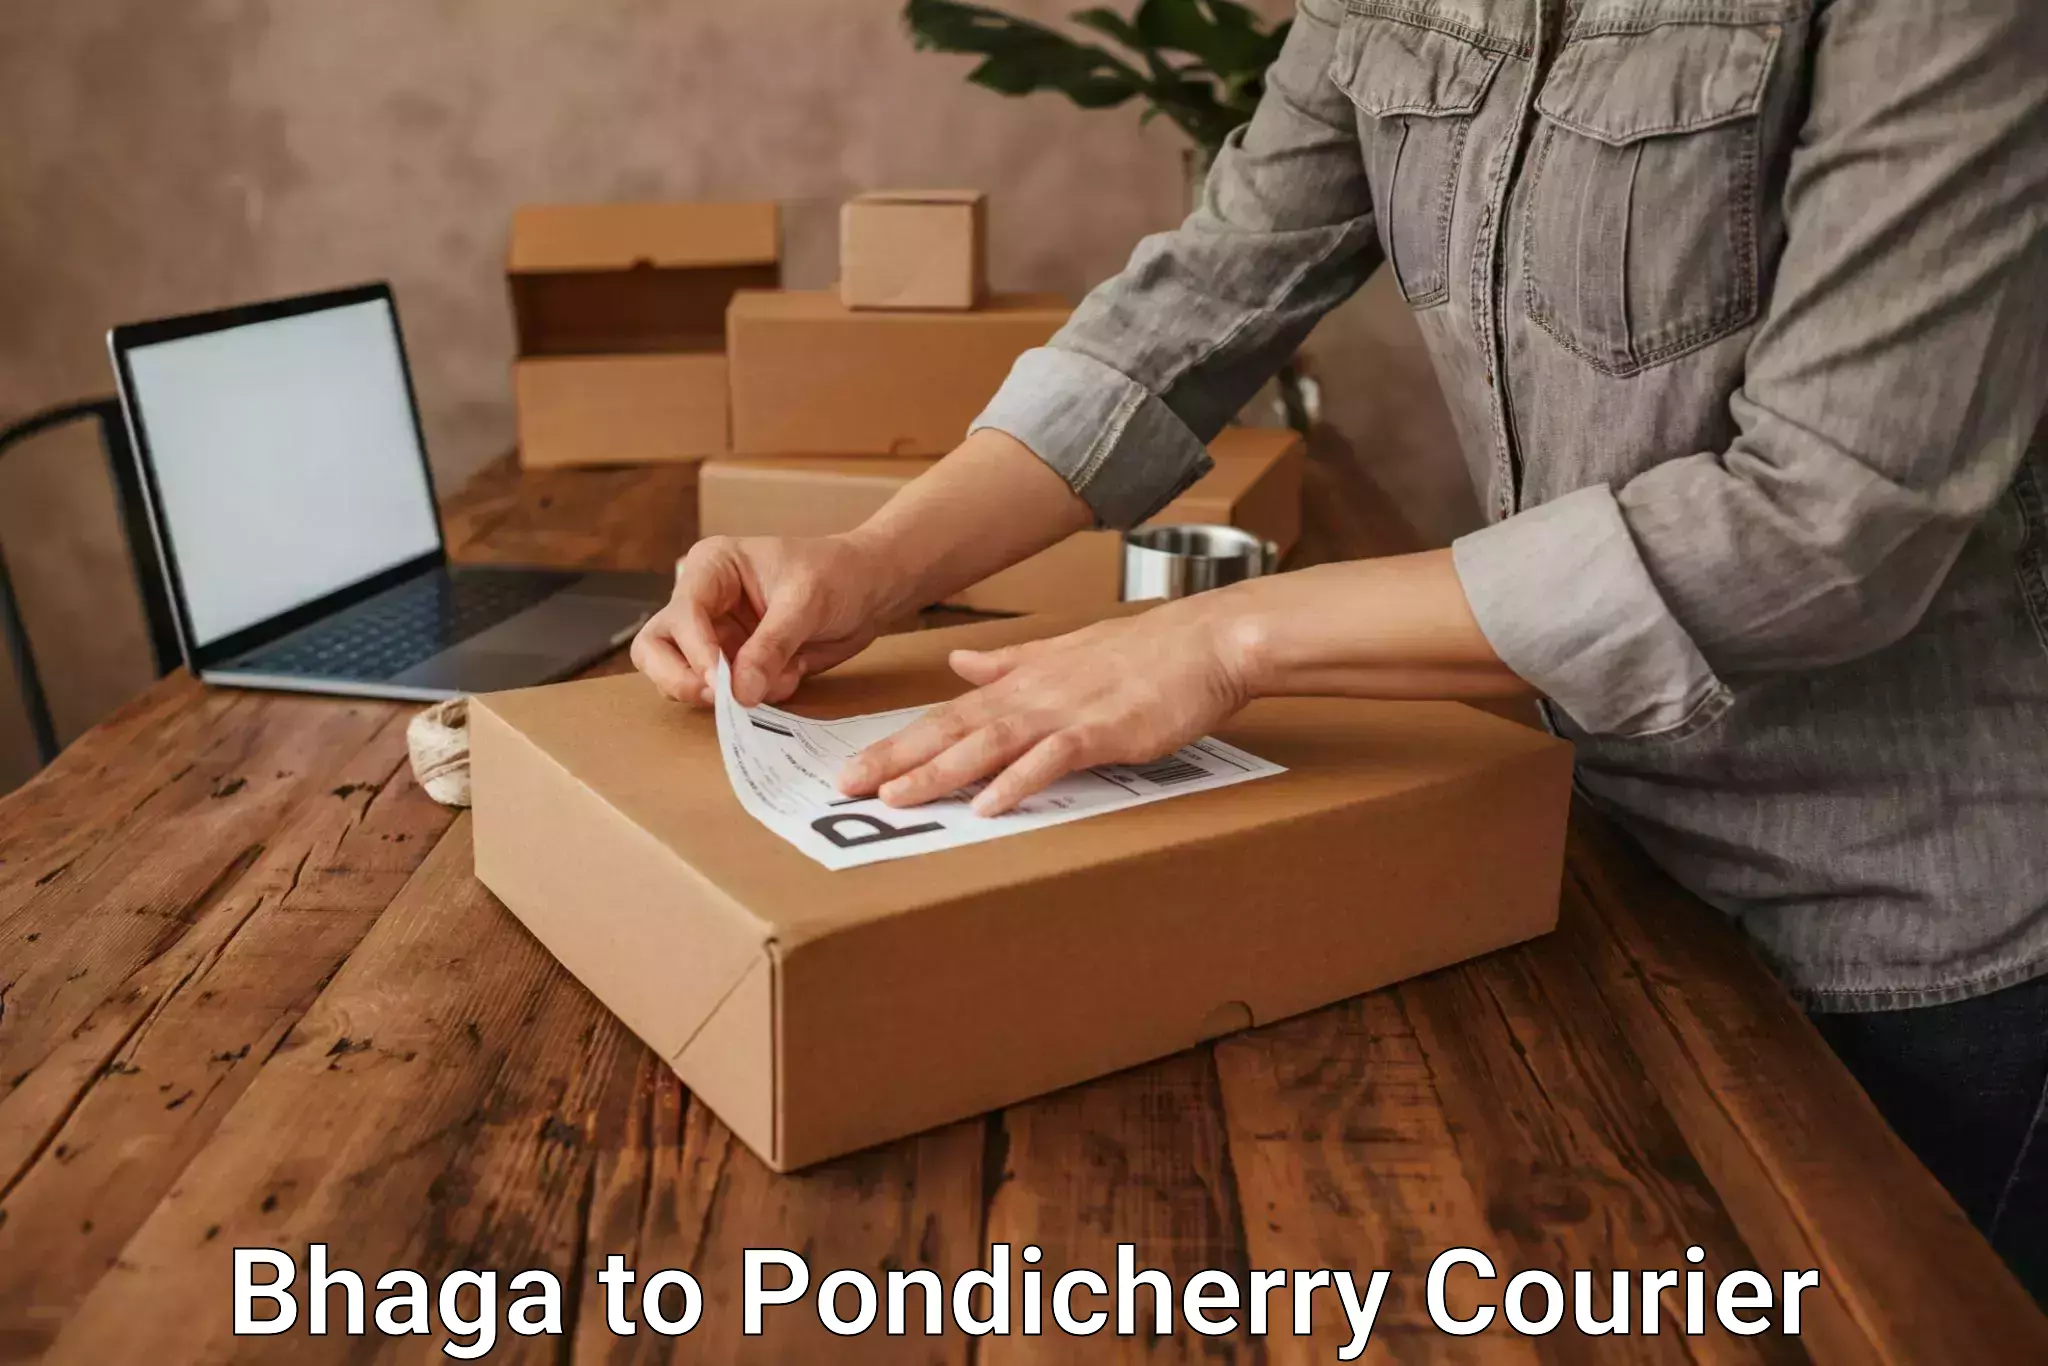 Cash on delivery service Bhaga to Pondicherry